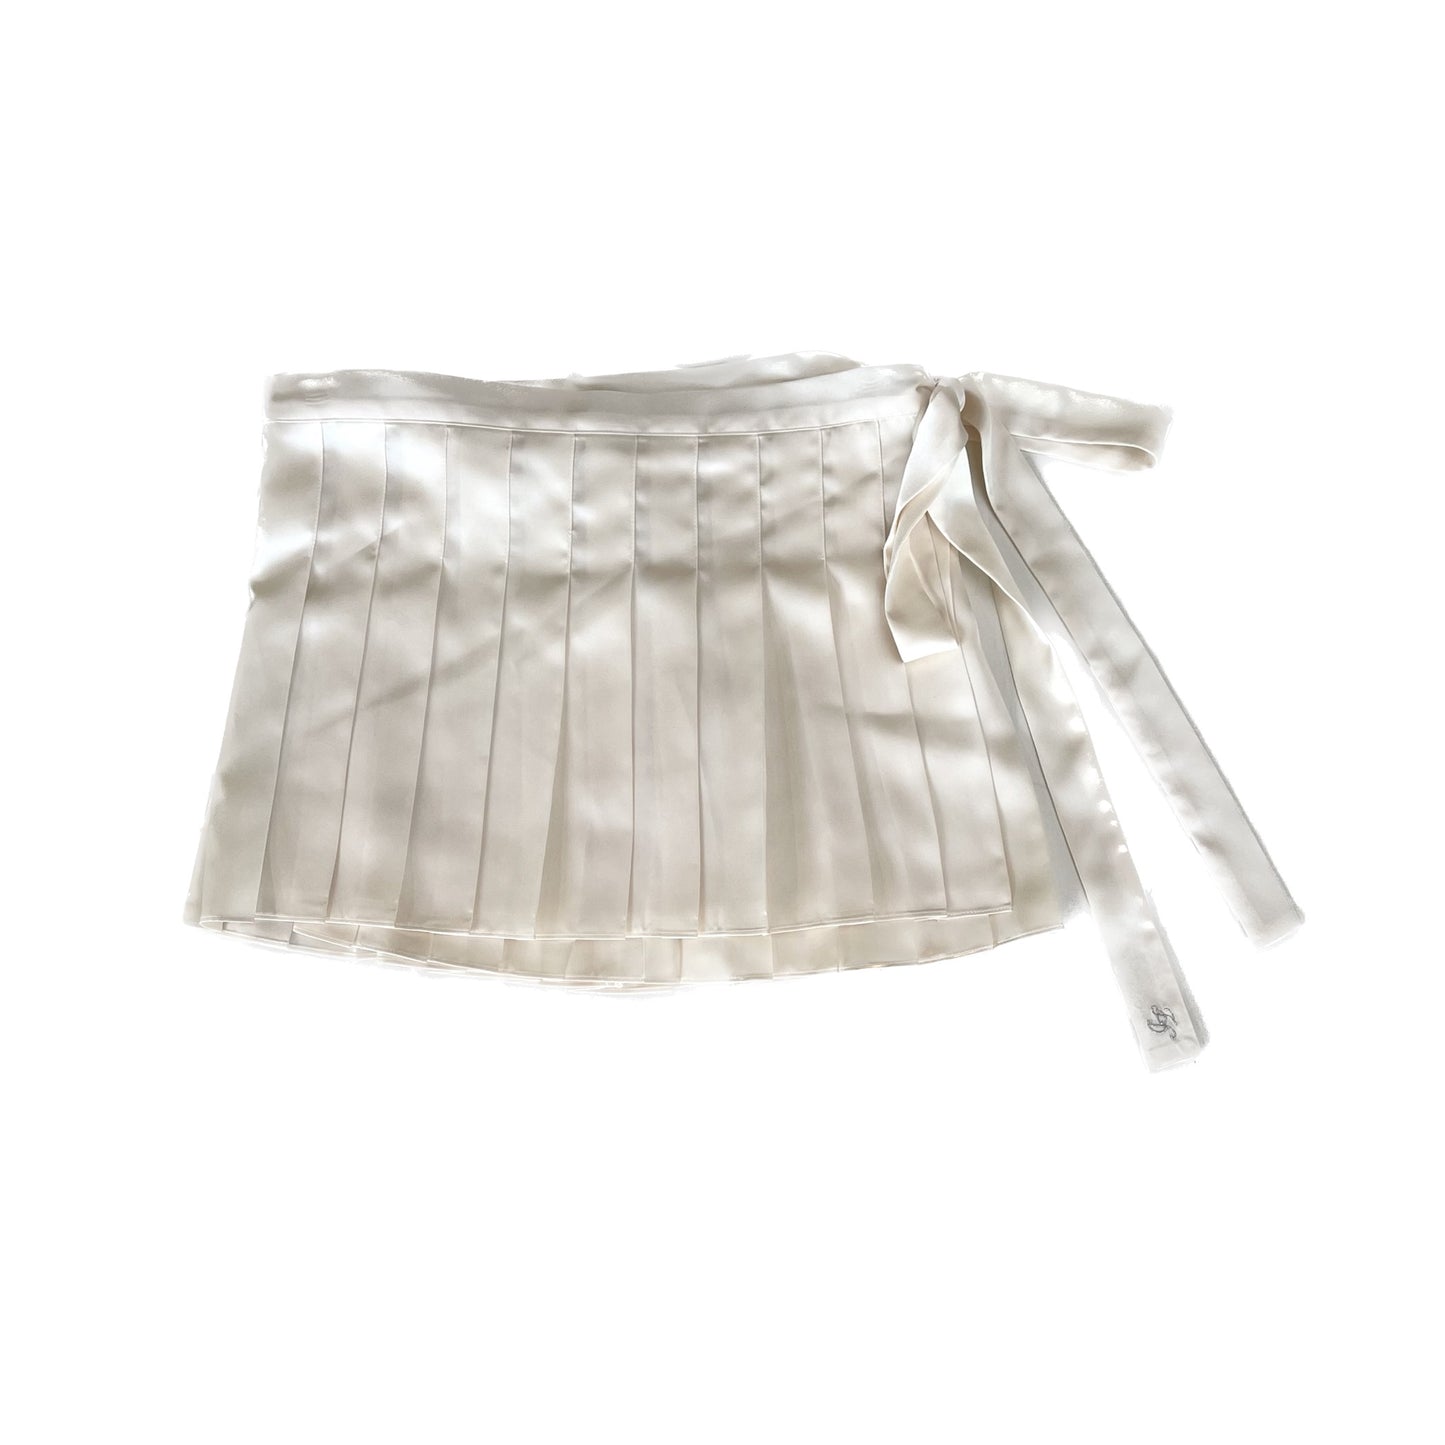 Sher pleats wrap skirt / Cream / ミニラップスカート